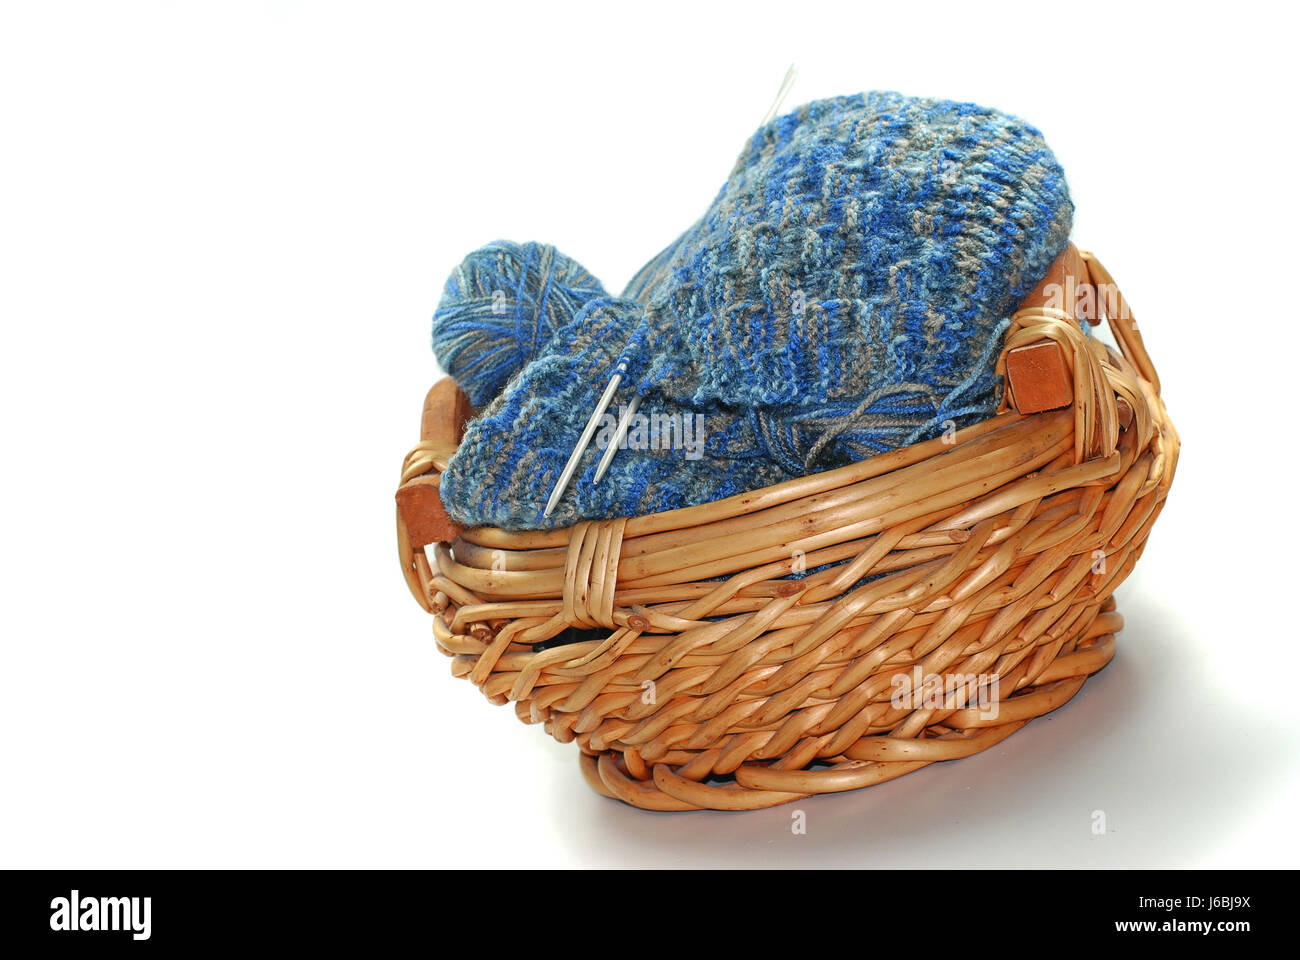 wool knit handicraft knitting handiworks make wool basket sweater knit Stock Photo